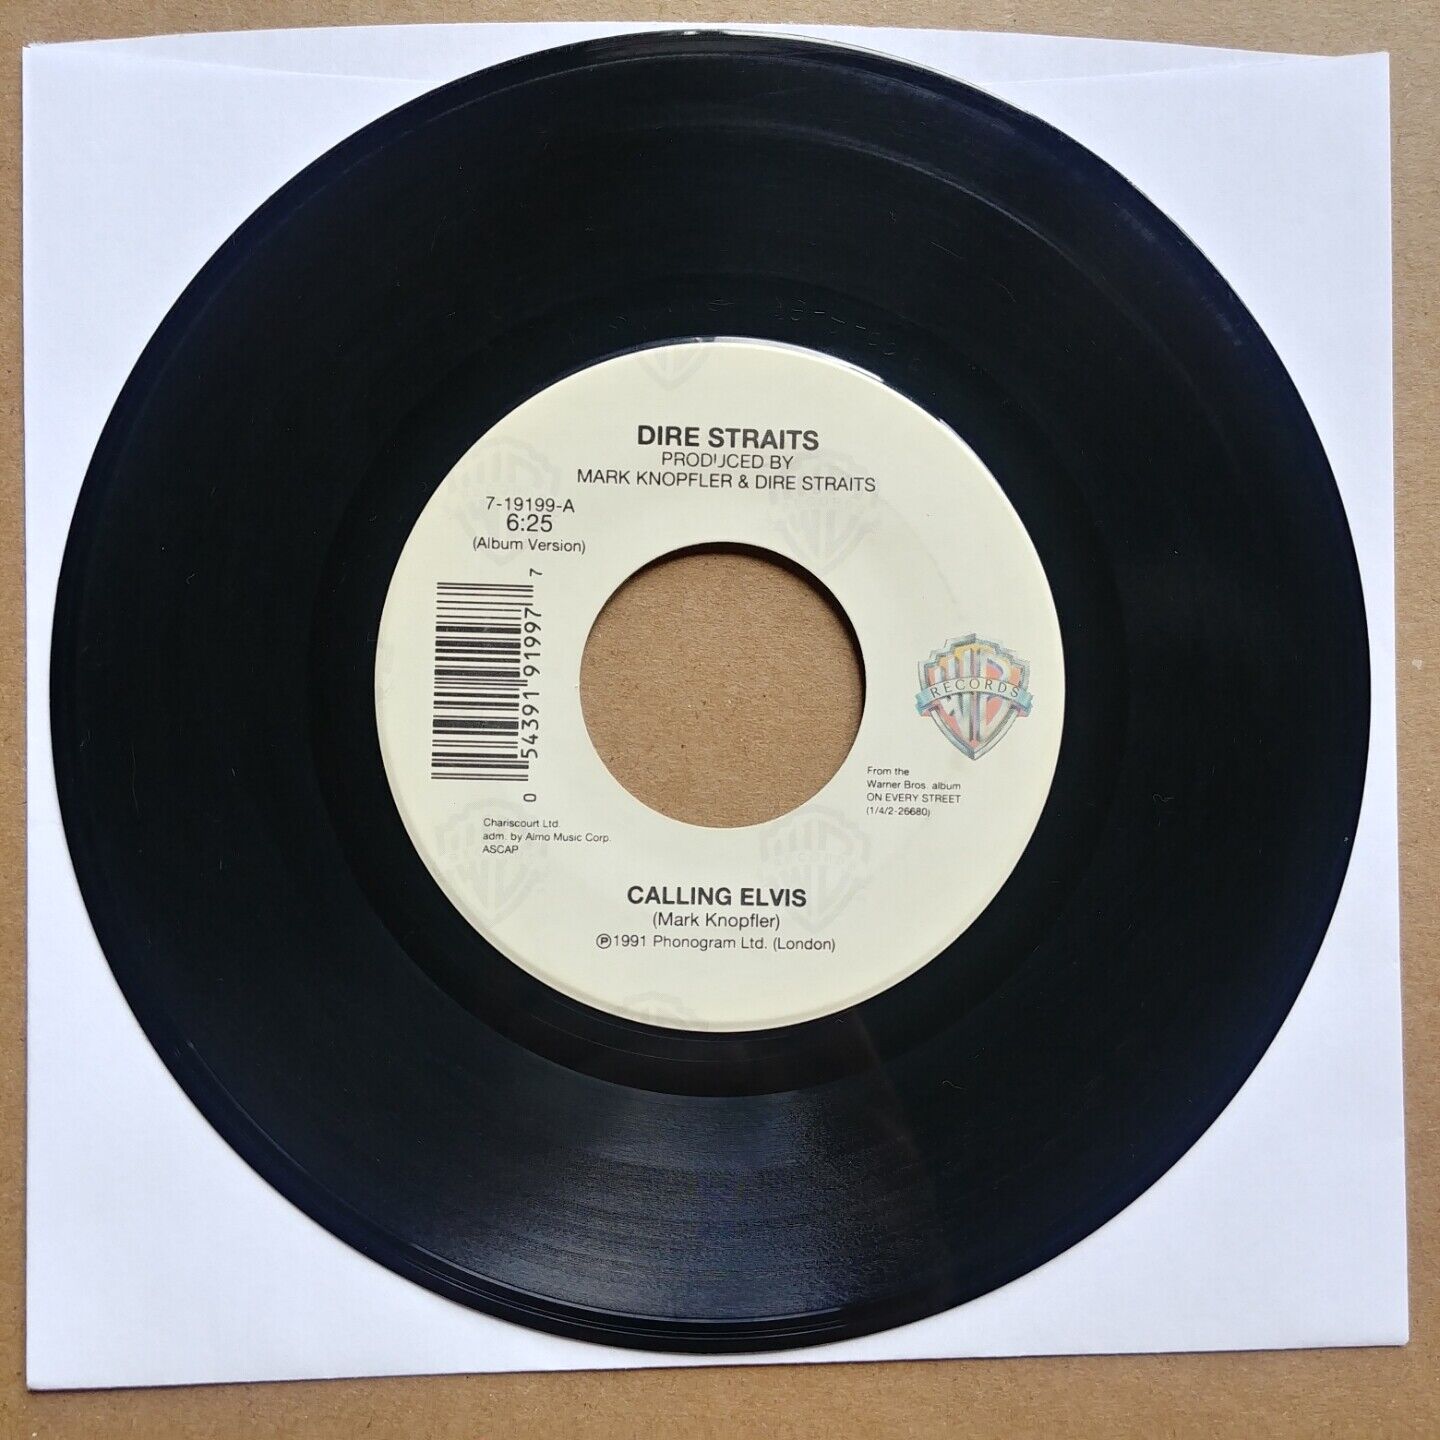 DIRE STRAITS Calling Elvis 45 7" POP ROCK Record Vinyl 1991 Warner Bros. Records